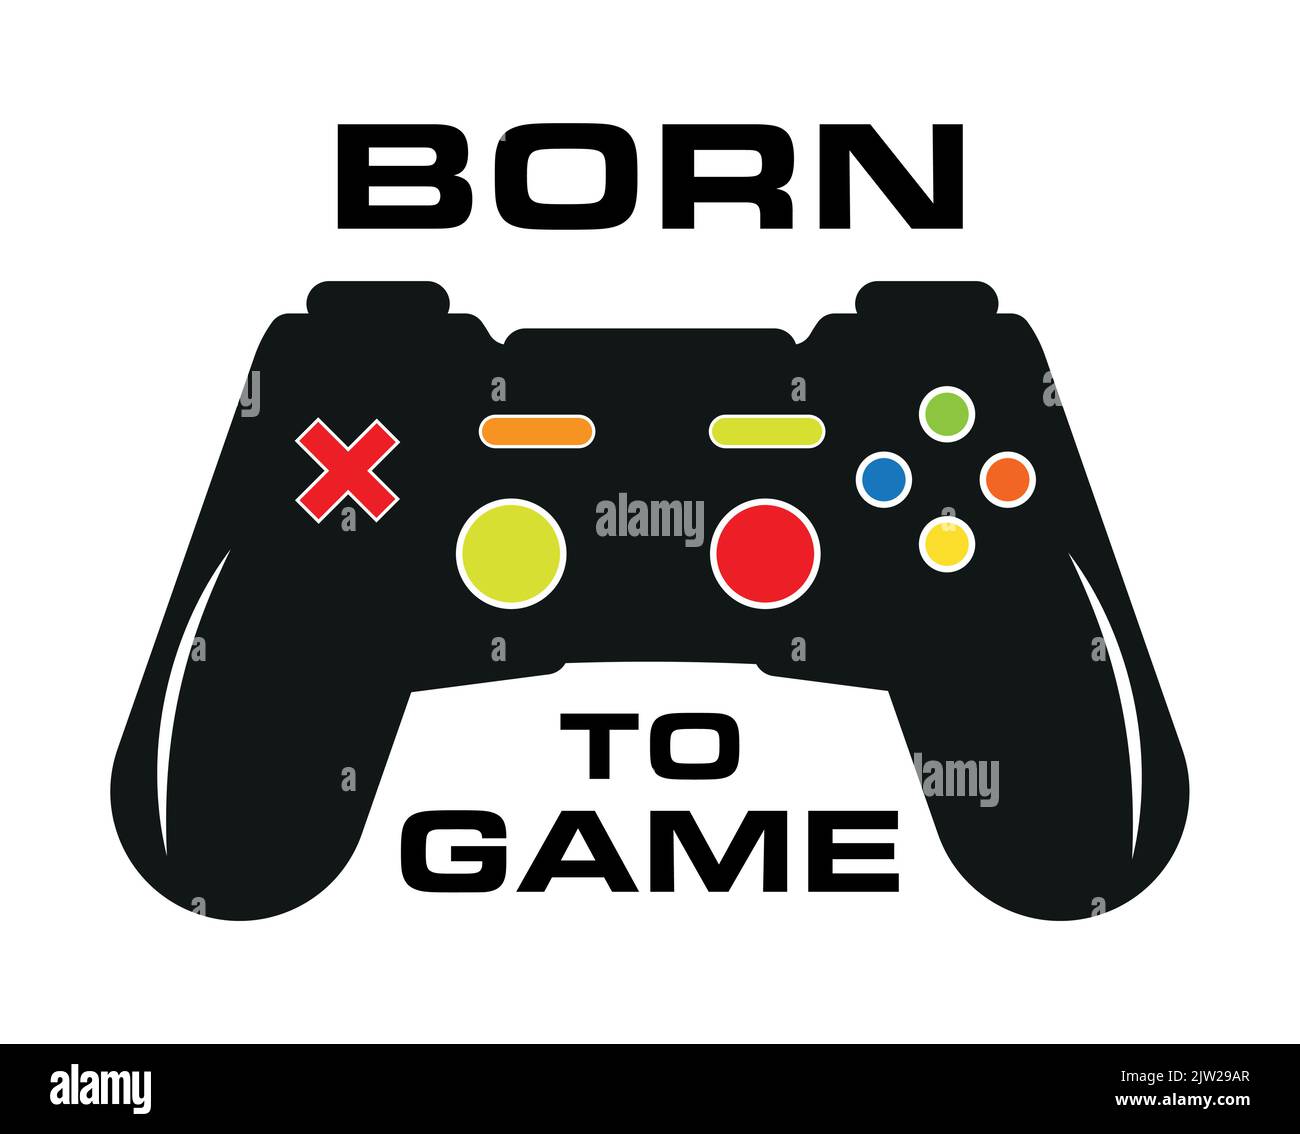 Born To Game - Colourful Vector Illustrator Stock Vector